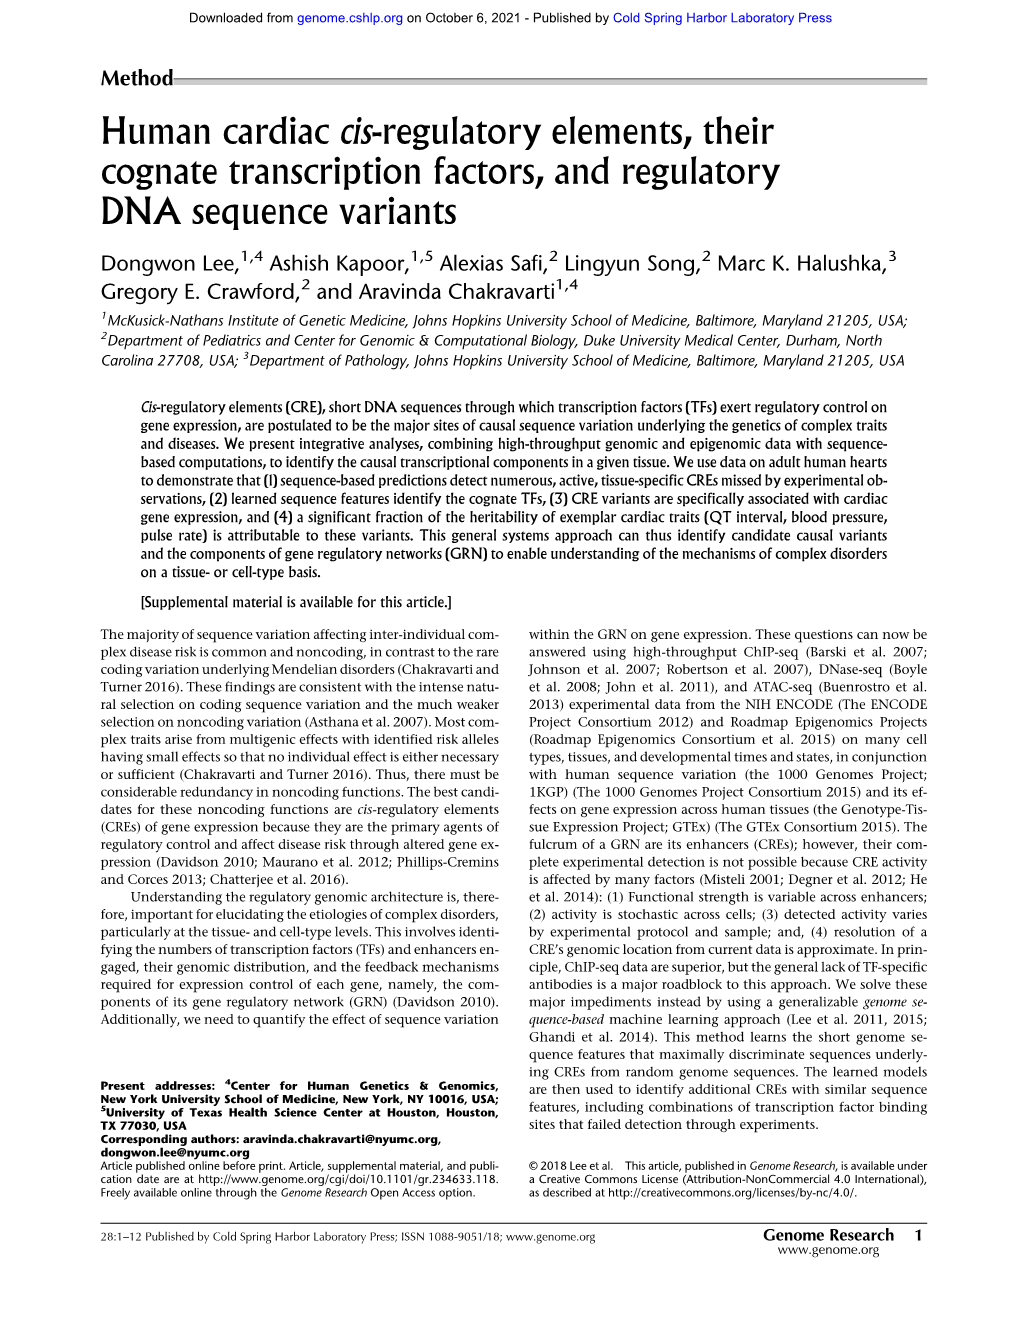 Human Cardiac Cis-Regulatory Elements, Their Cognate Transcription Factors, and Regulatory DNA Sequence Variants